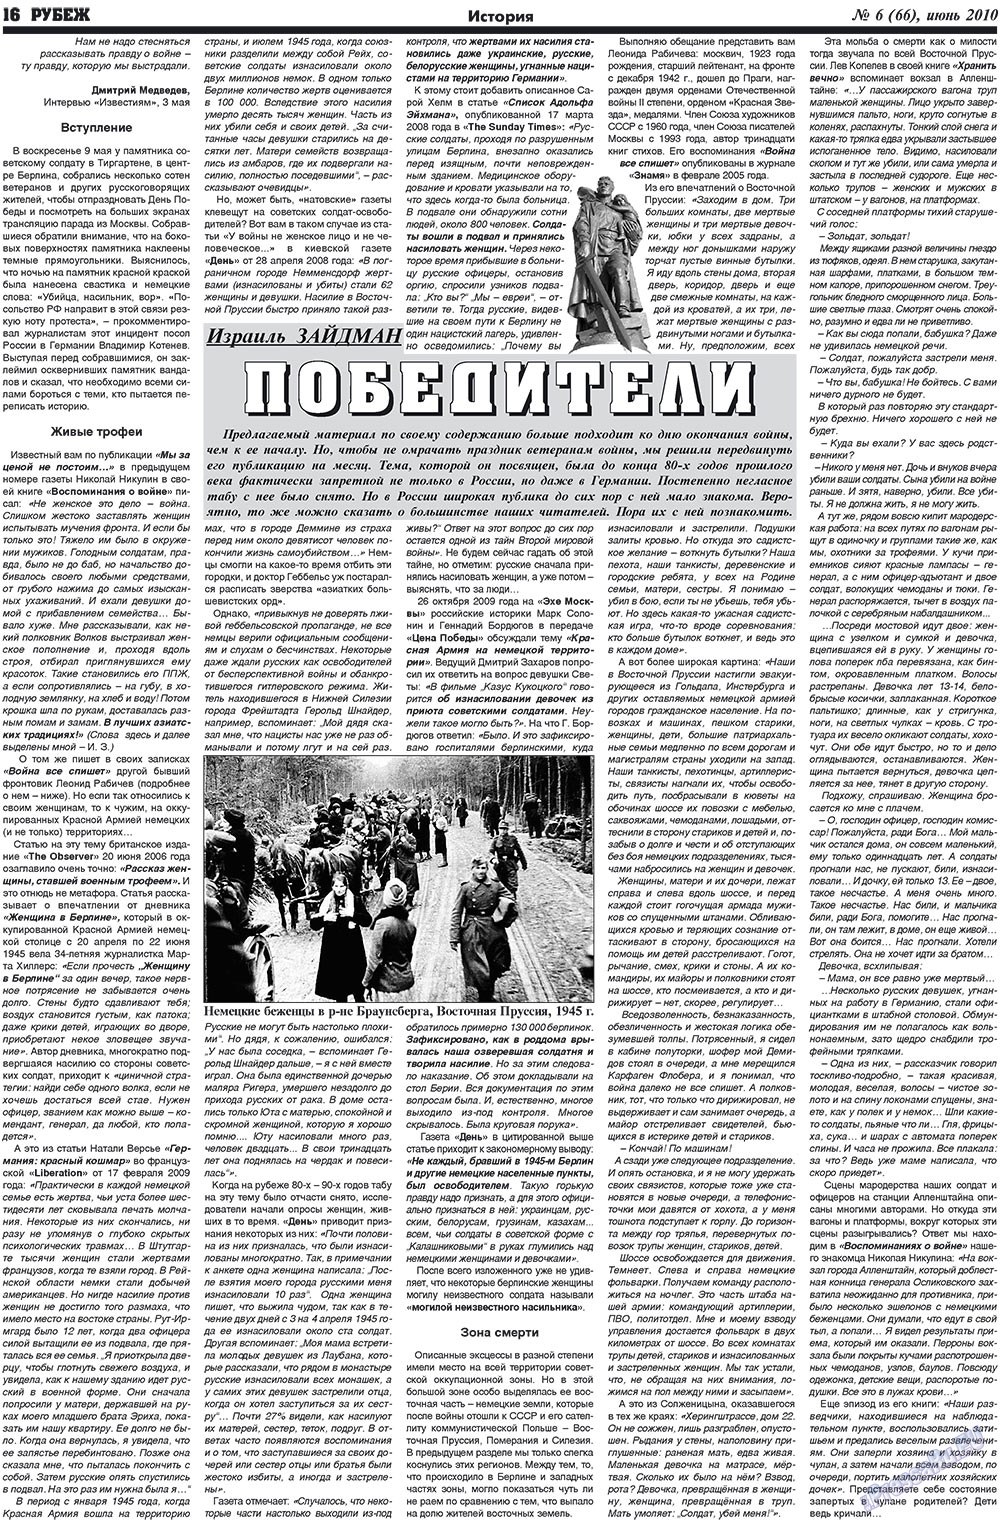 Рубеж, газета. 2010 №6 стр.16